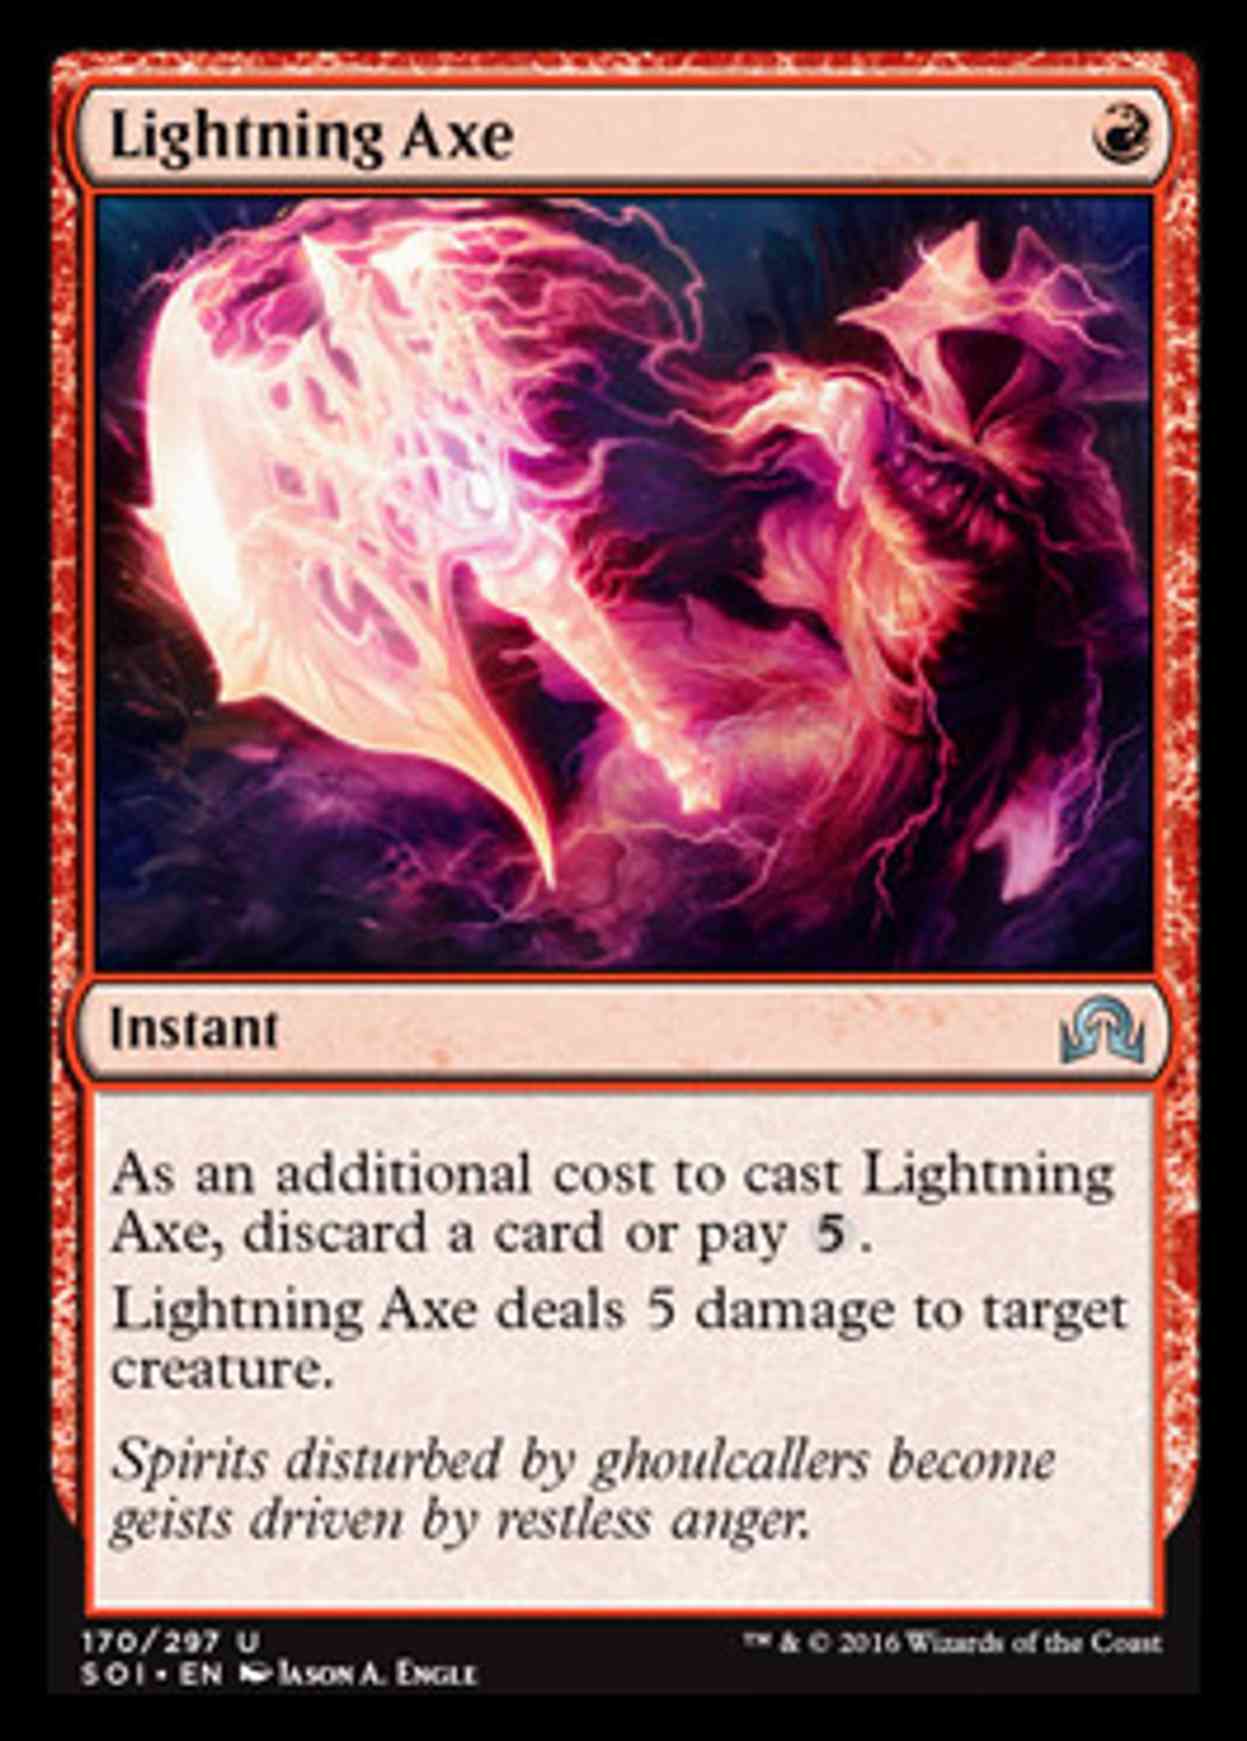 Lightning Axe magic card front